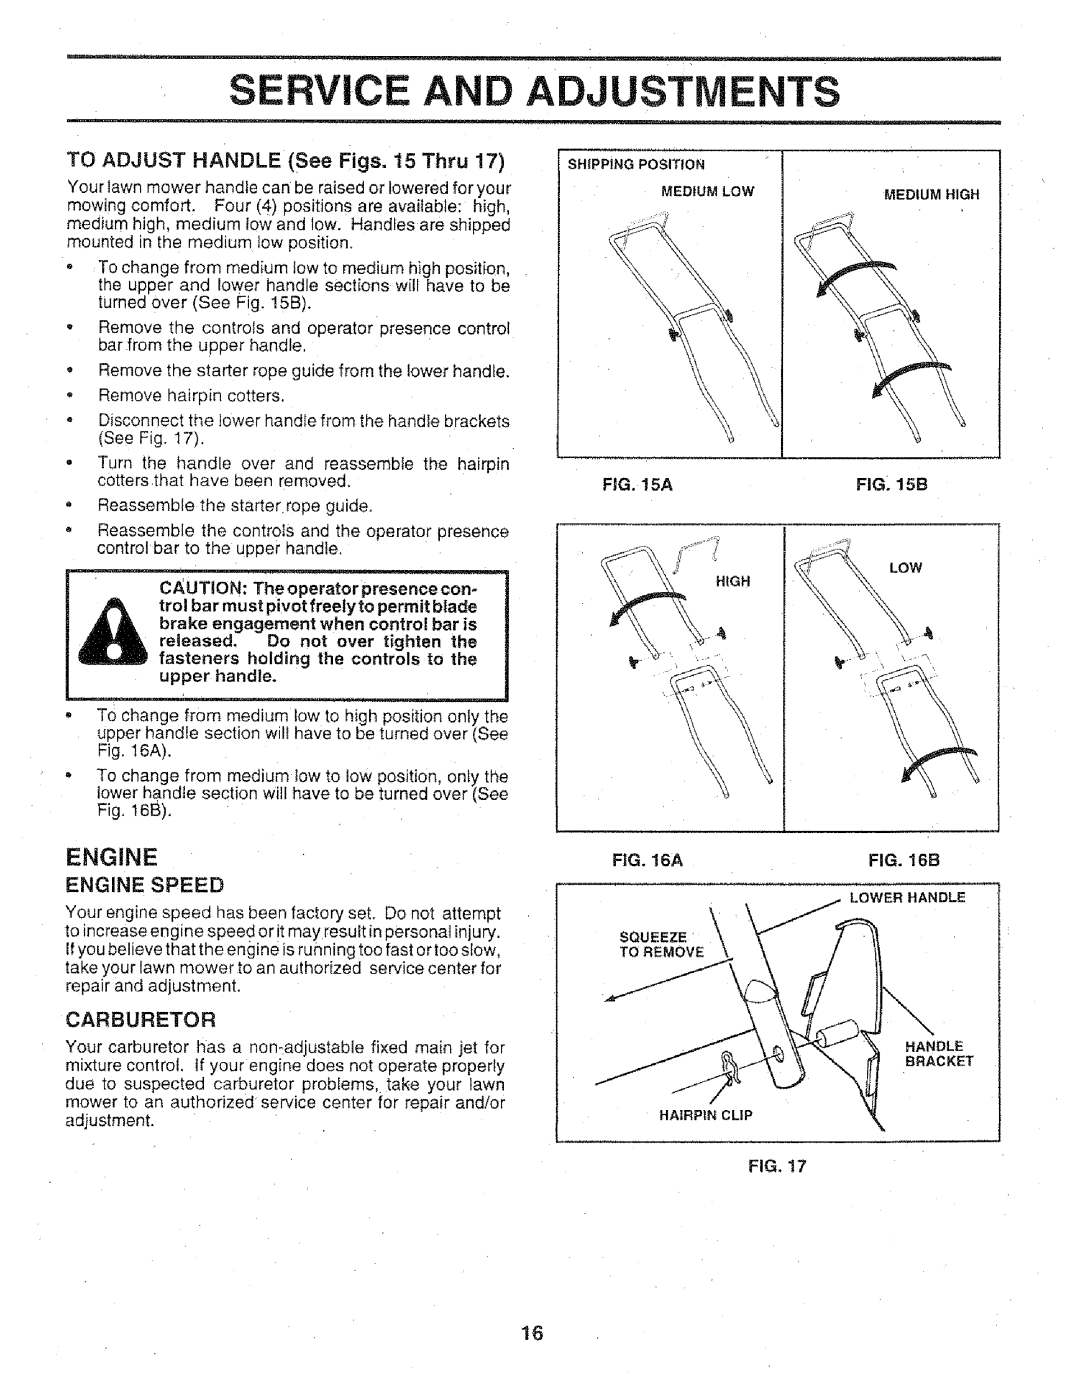 Craftsman 917.3773 manual Adjustments, TO ADJUST HANDLE See Figs. 15 Thru, Engine Speed, B, Service 